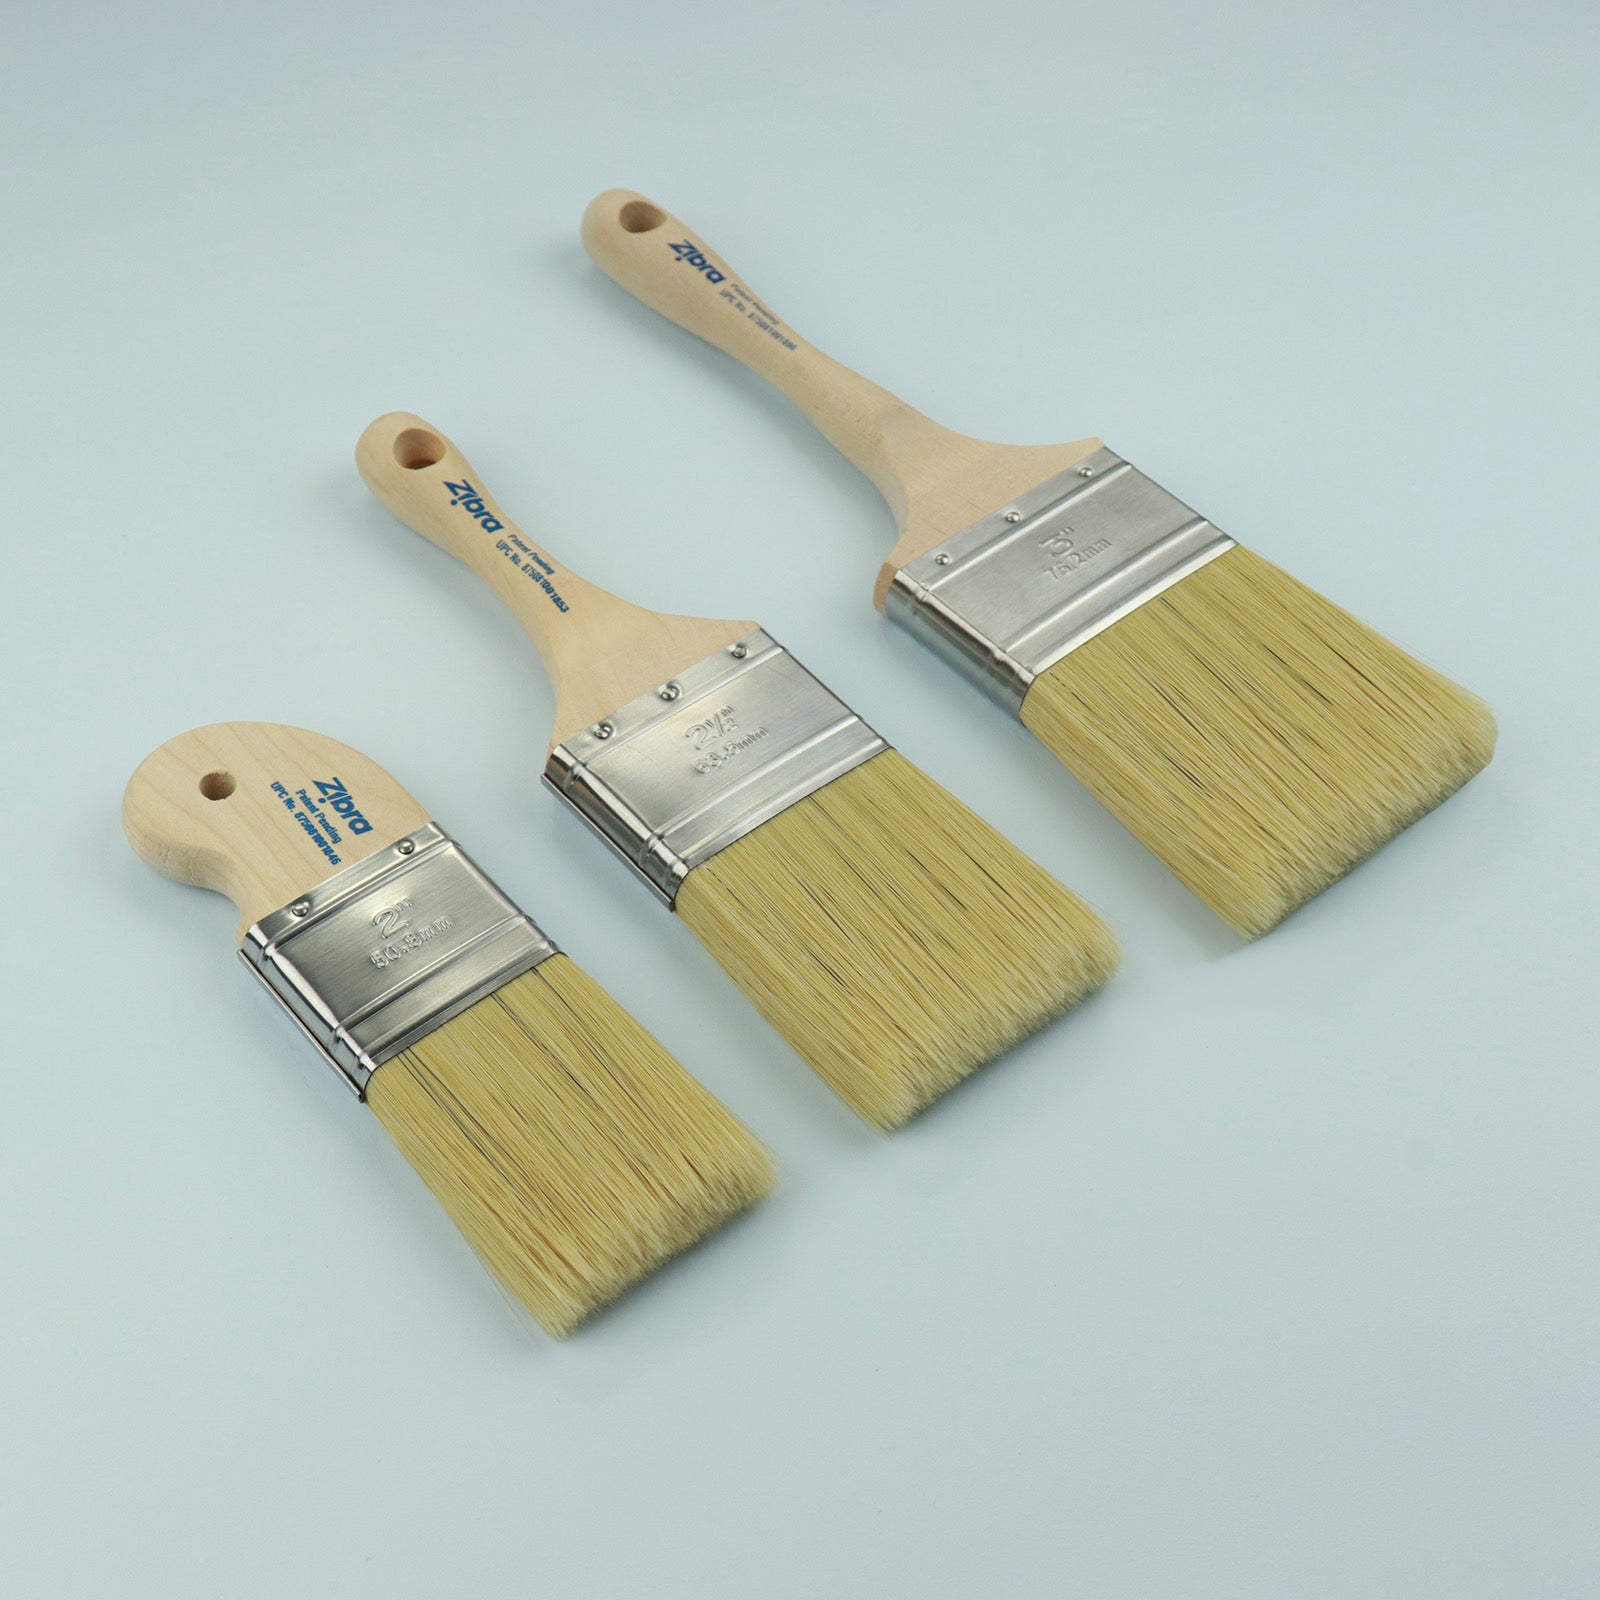 60 pieces 5 Pack Wood Handle Paint Brush Set - Paint, Brushes